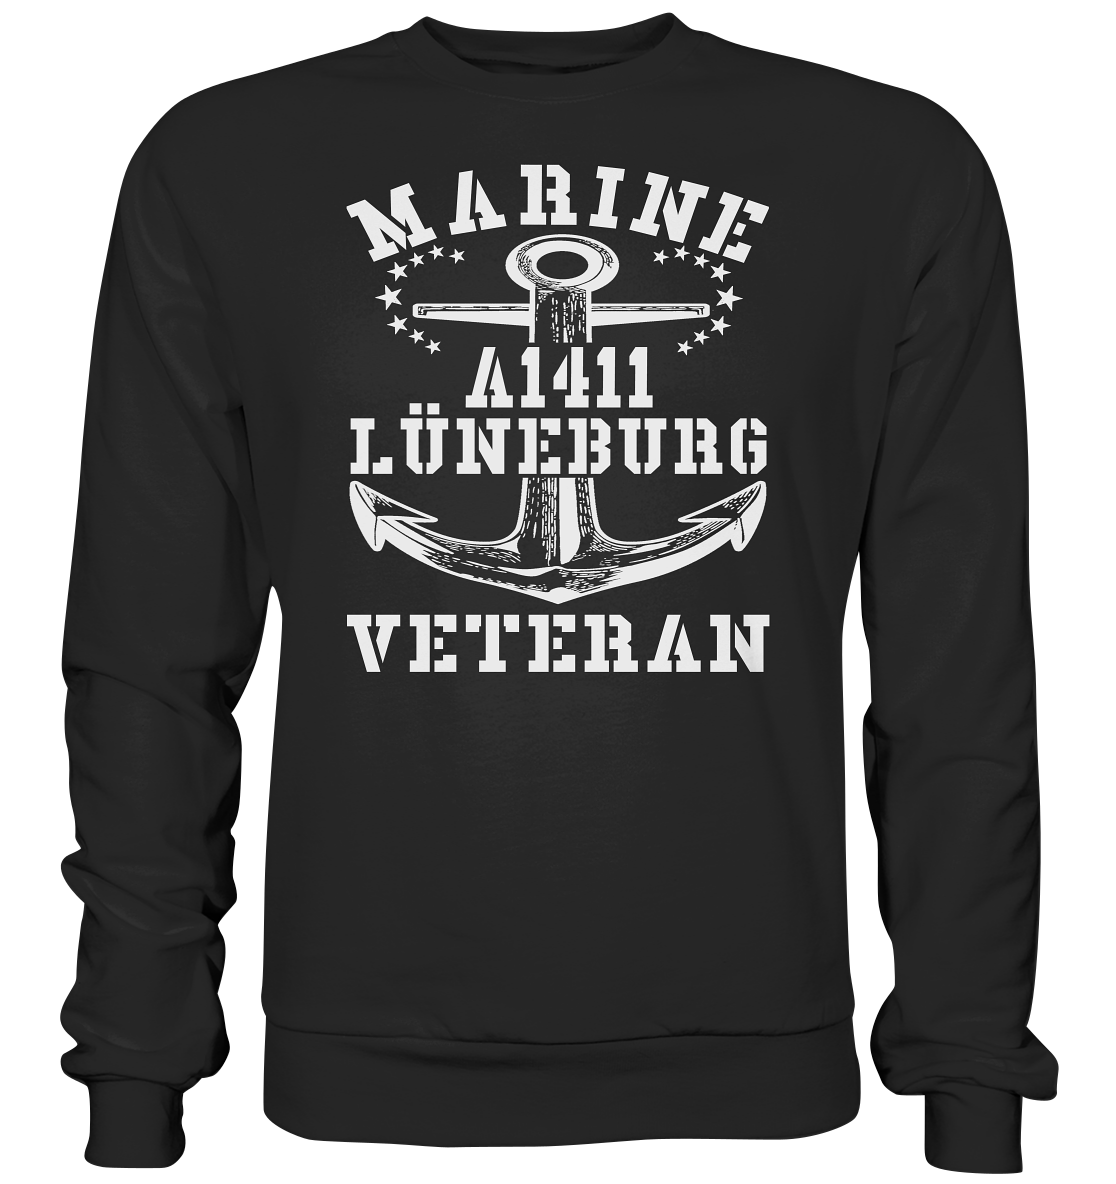 Troßschiff A1411 LÜNEBURG Marine Veteran - Premium Sweatshirt